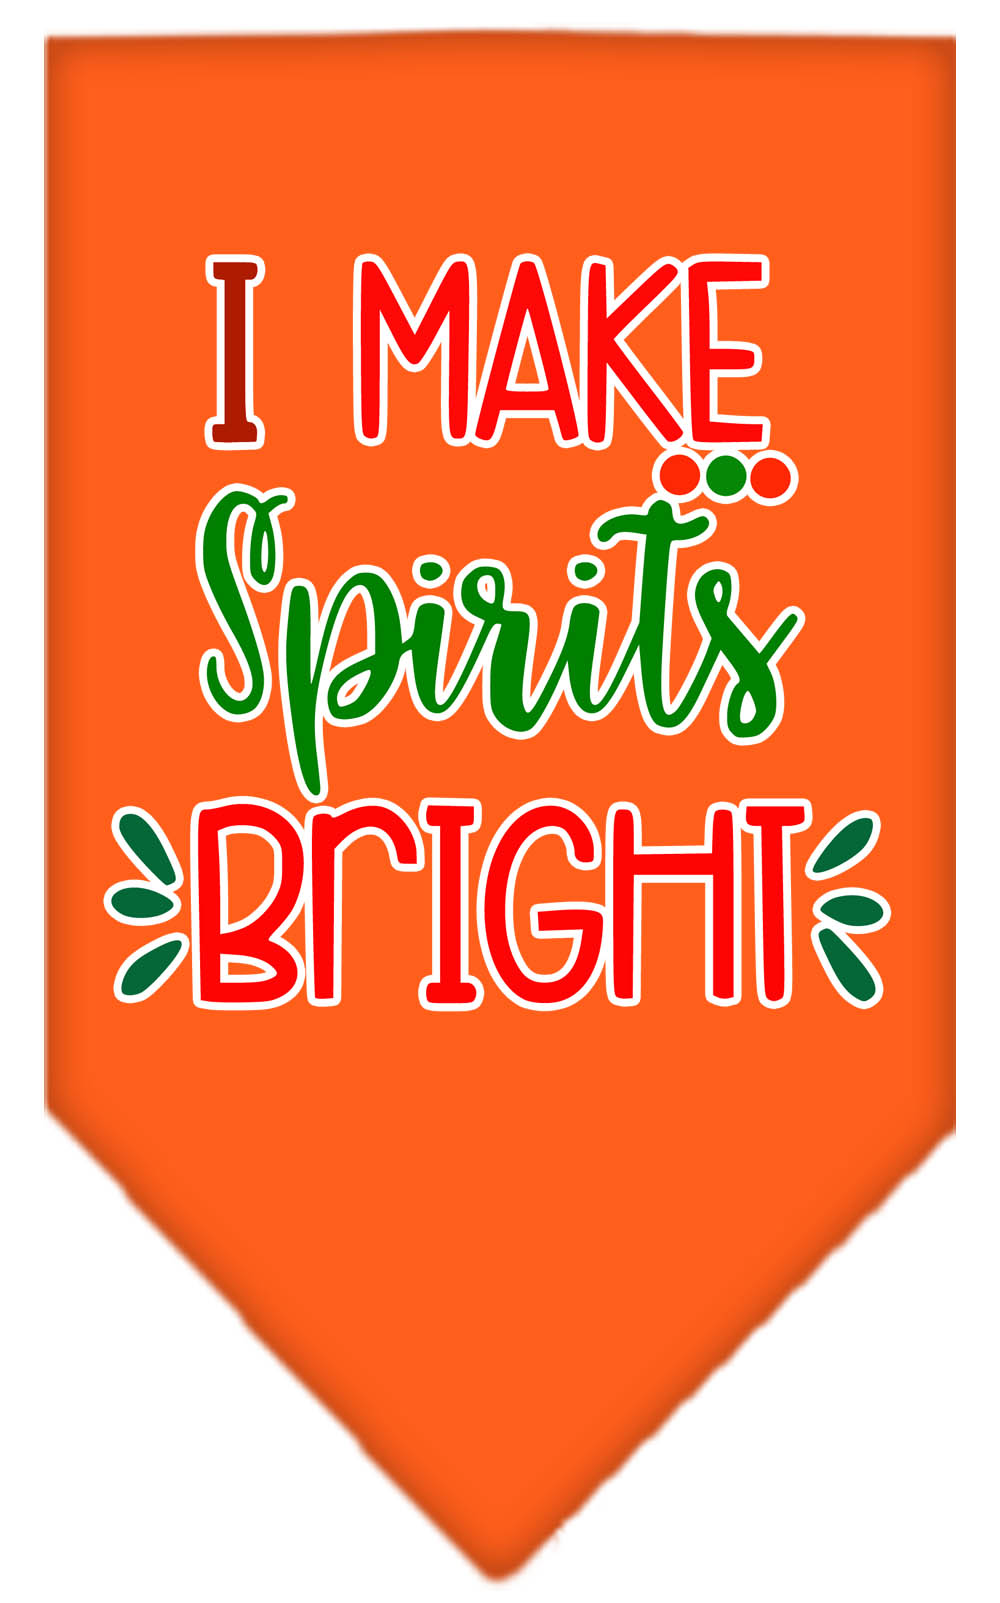 I Make Spirits Bright Screen Print Bandana Orange Large